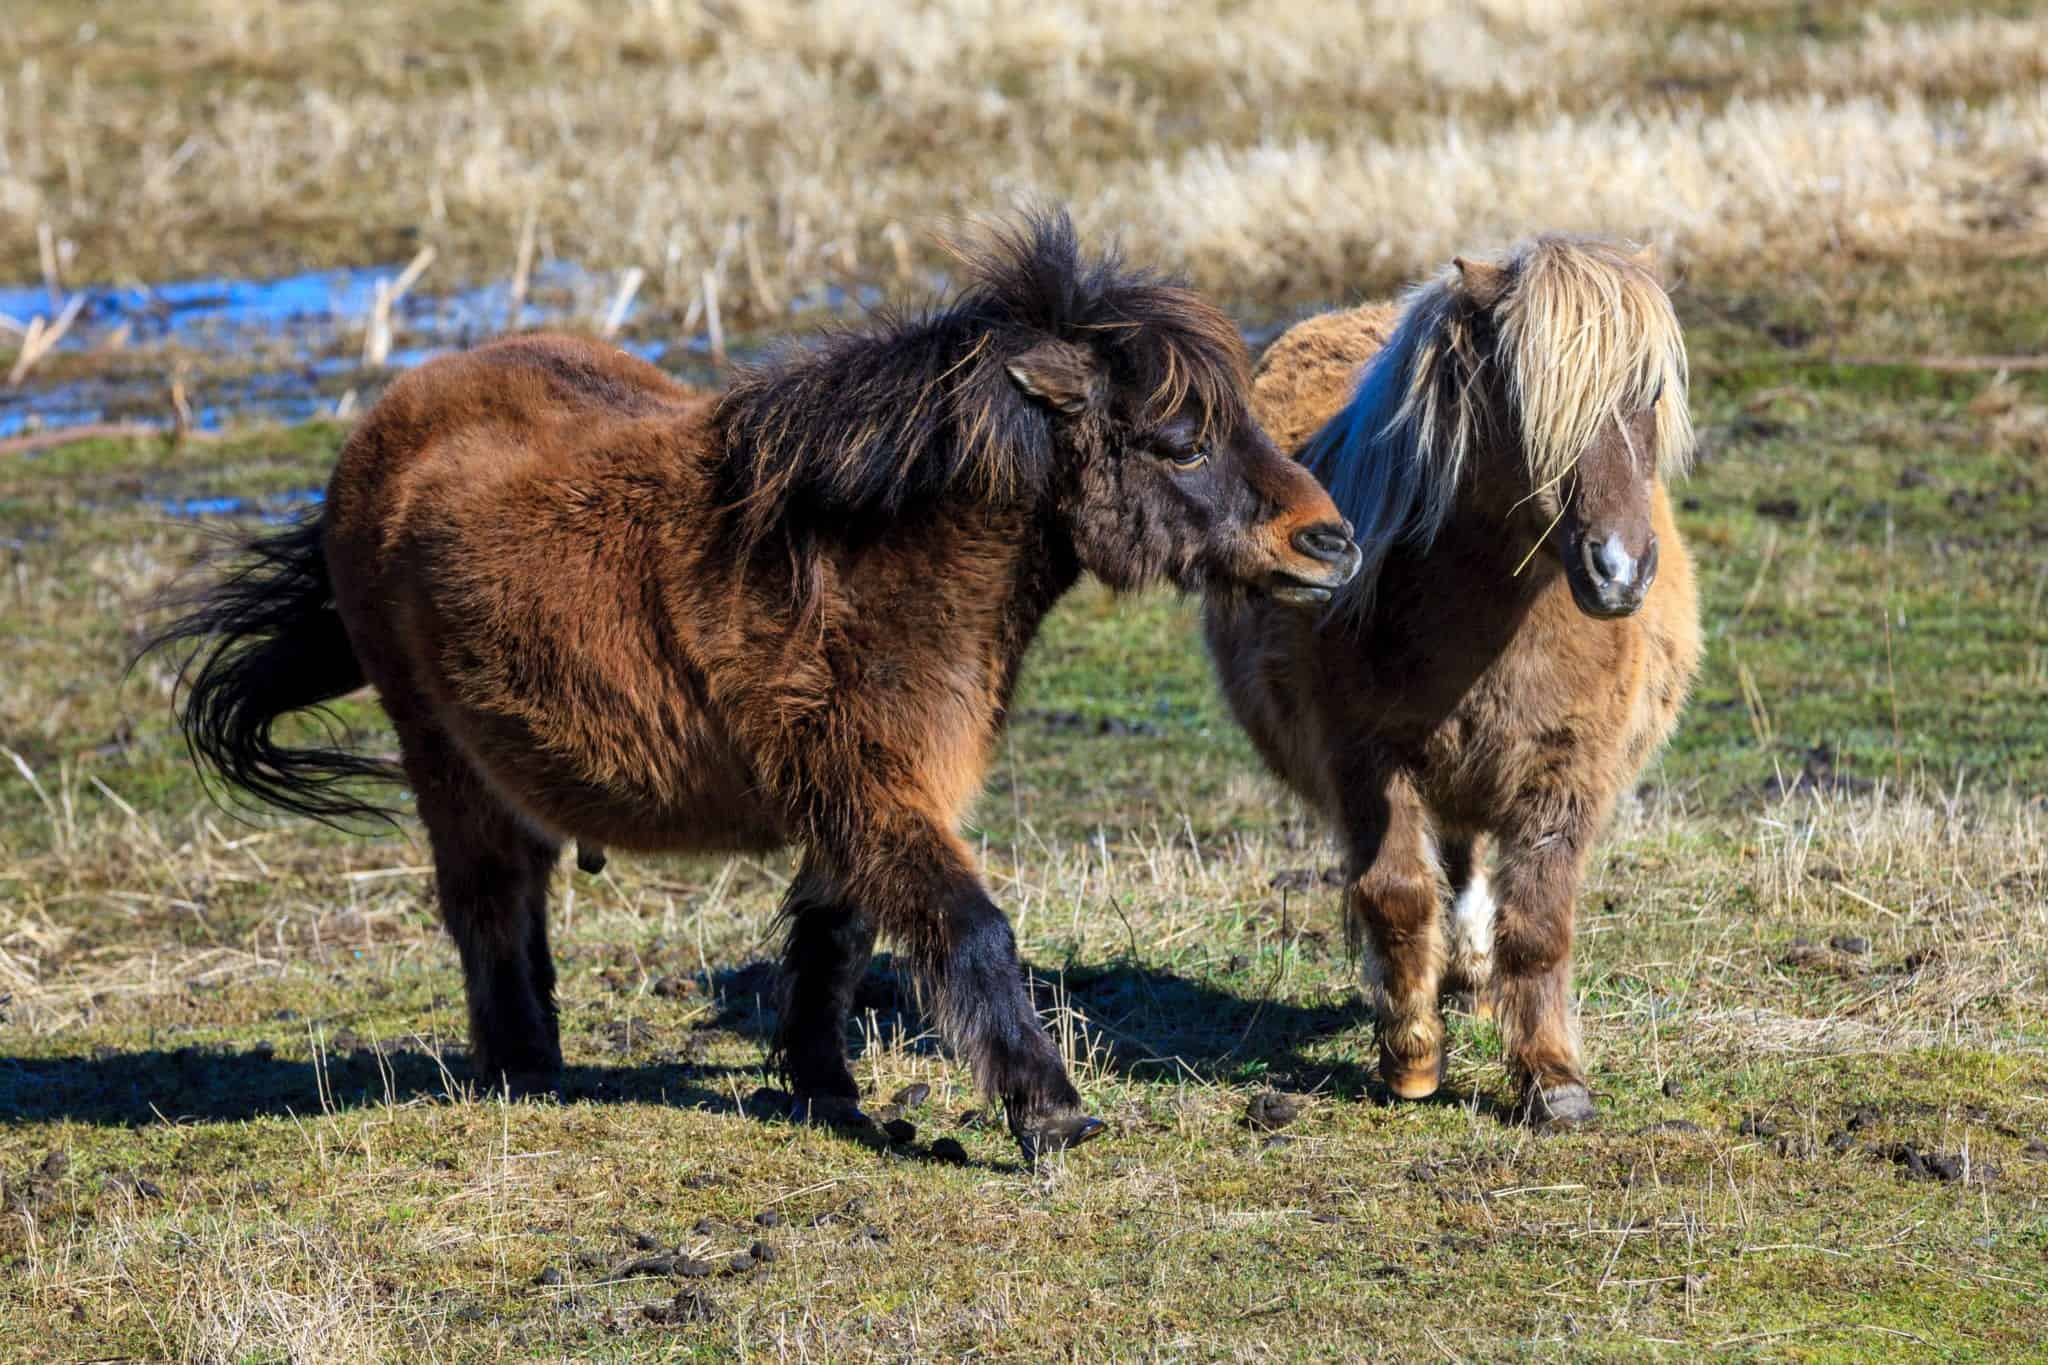 Two cute miniature horses interact in a field near Harrison, Idaho.